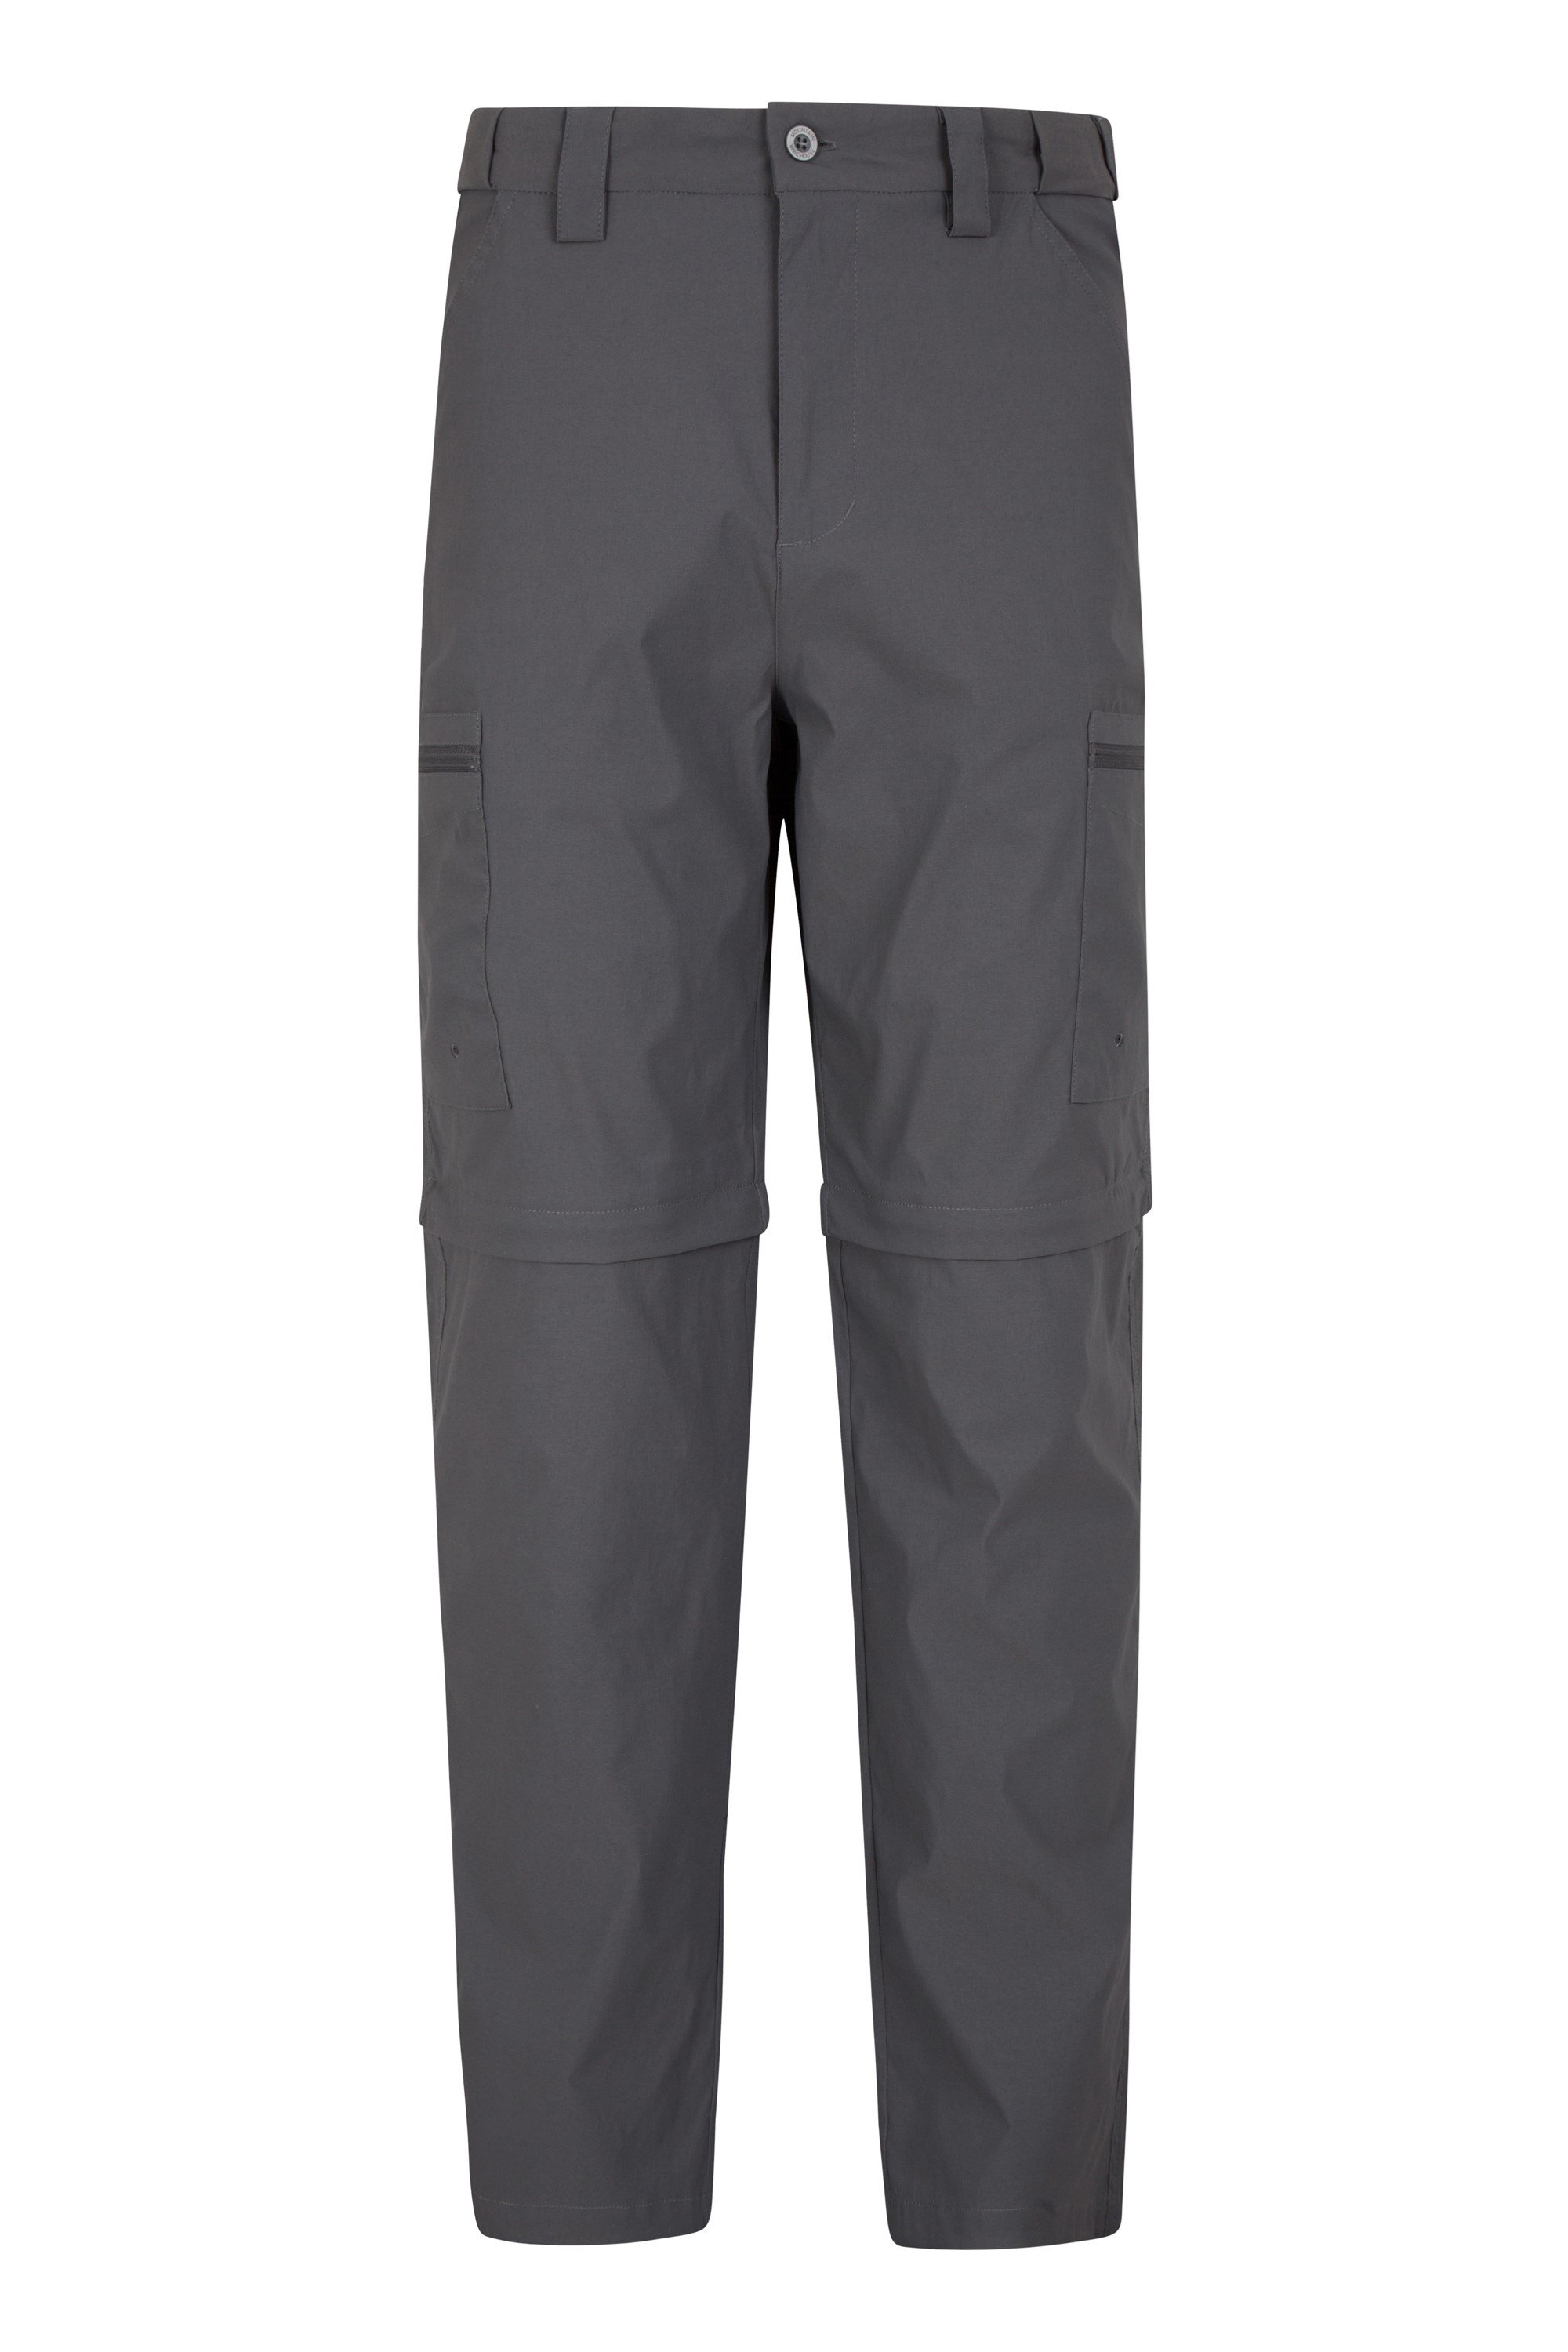 Trek Mens Stretch Convertible Trousers - Grey